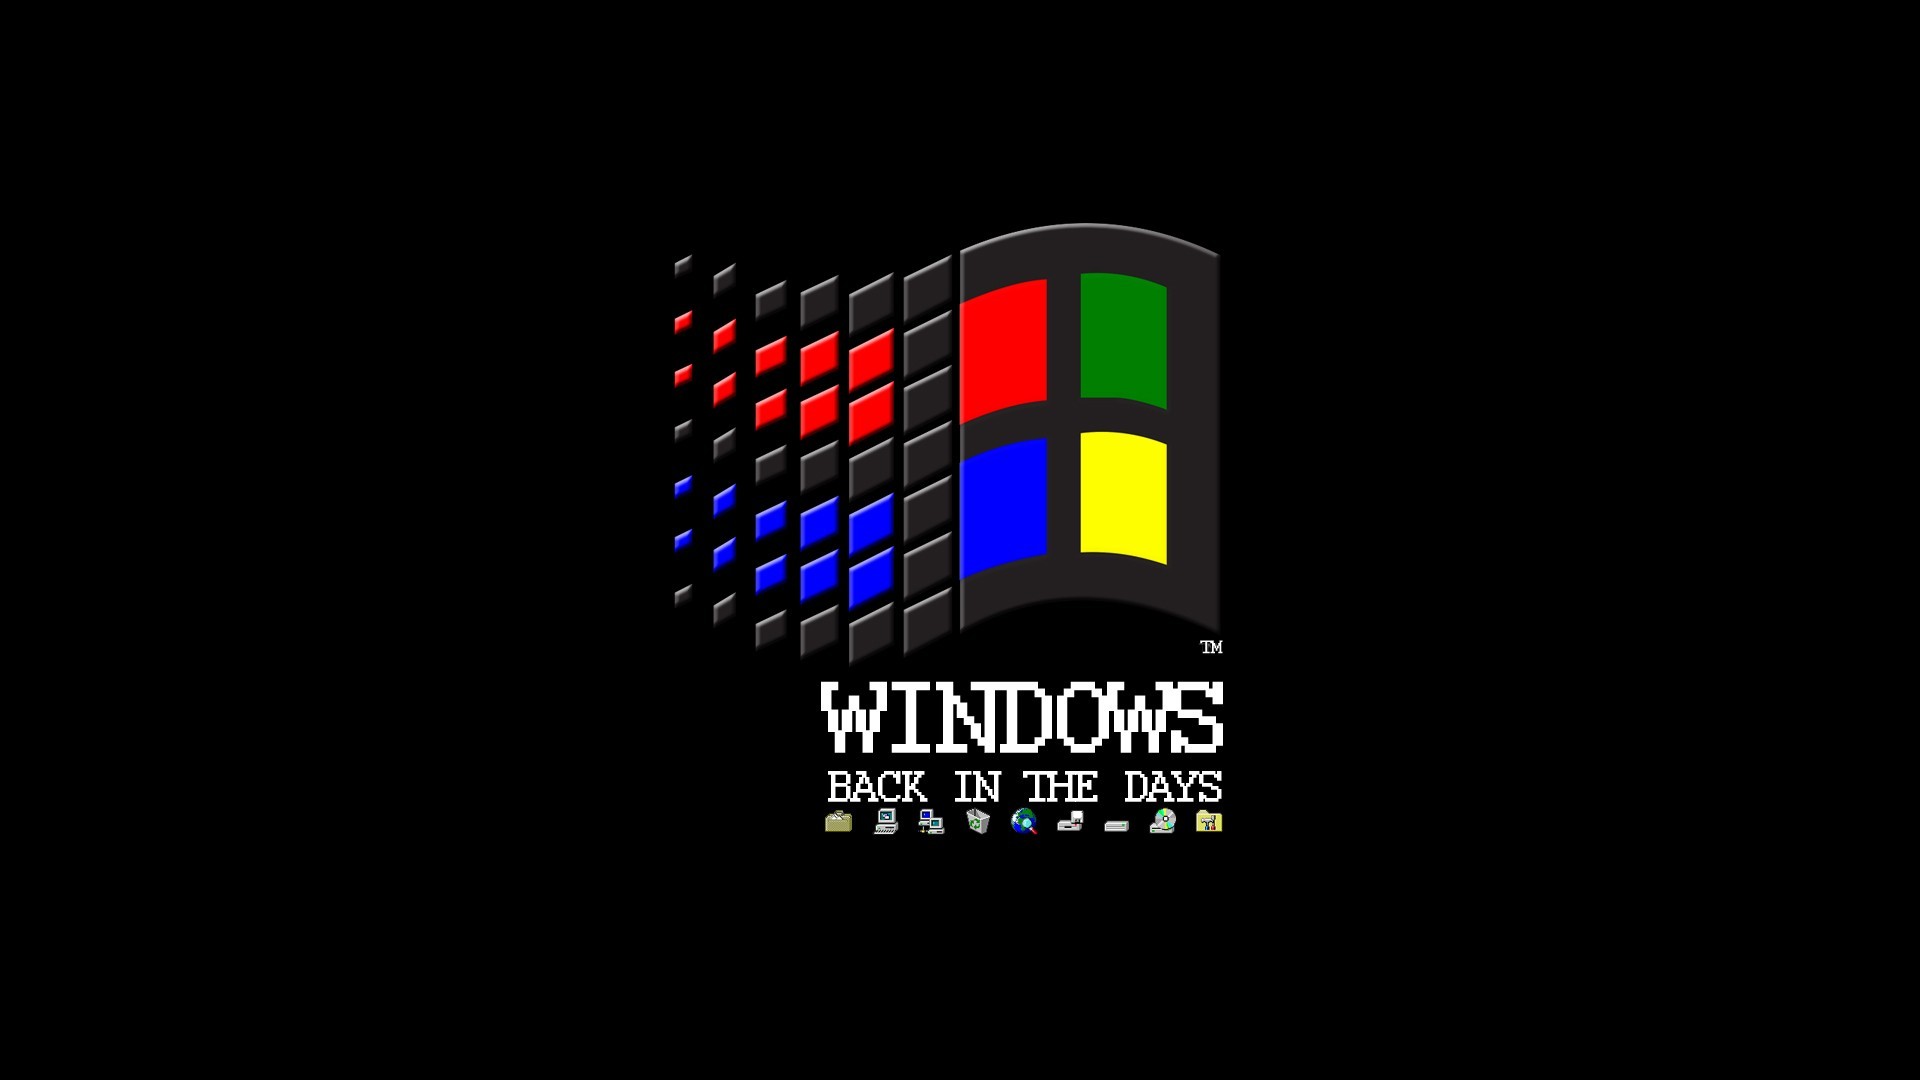 Microsoft Windows, Vintage, Logo, Black Background, Floppy Disk, MS DOS